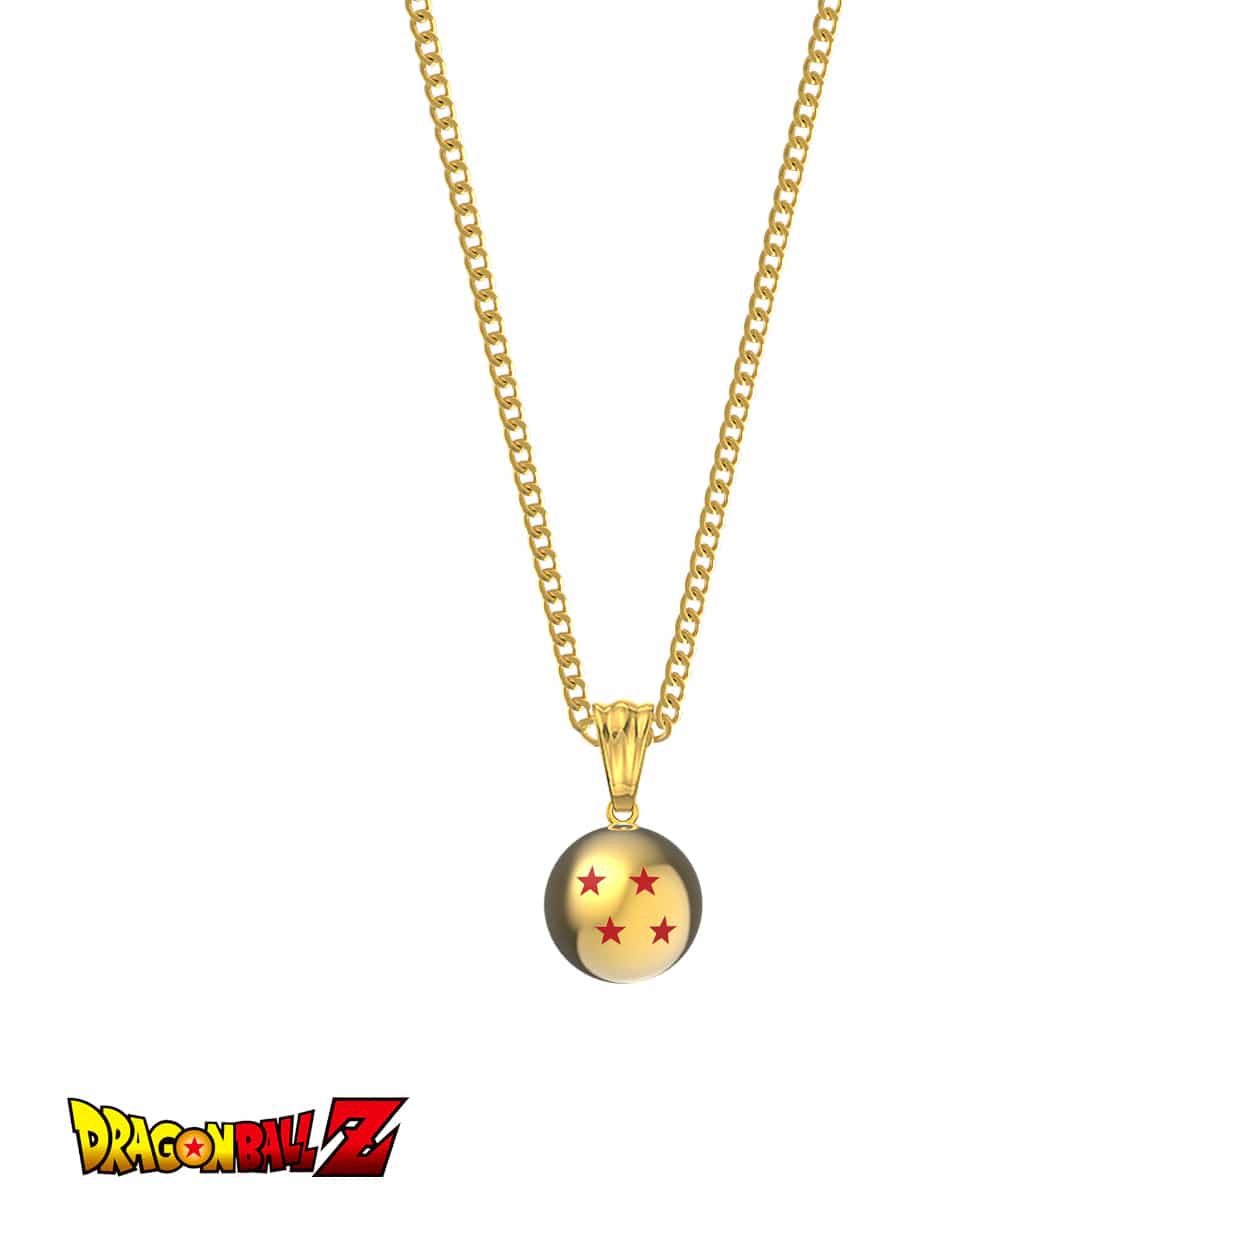 Dragonball Z™ 4-Star Necklace